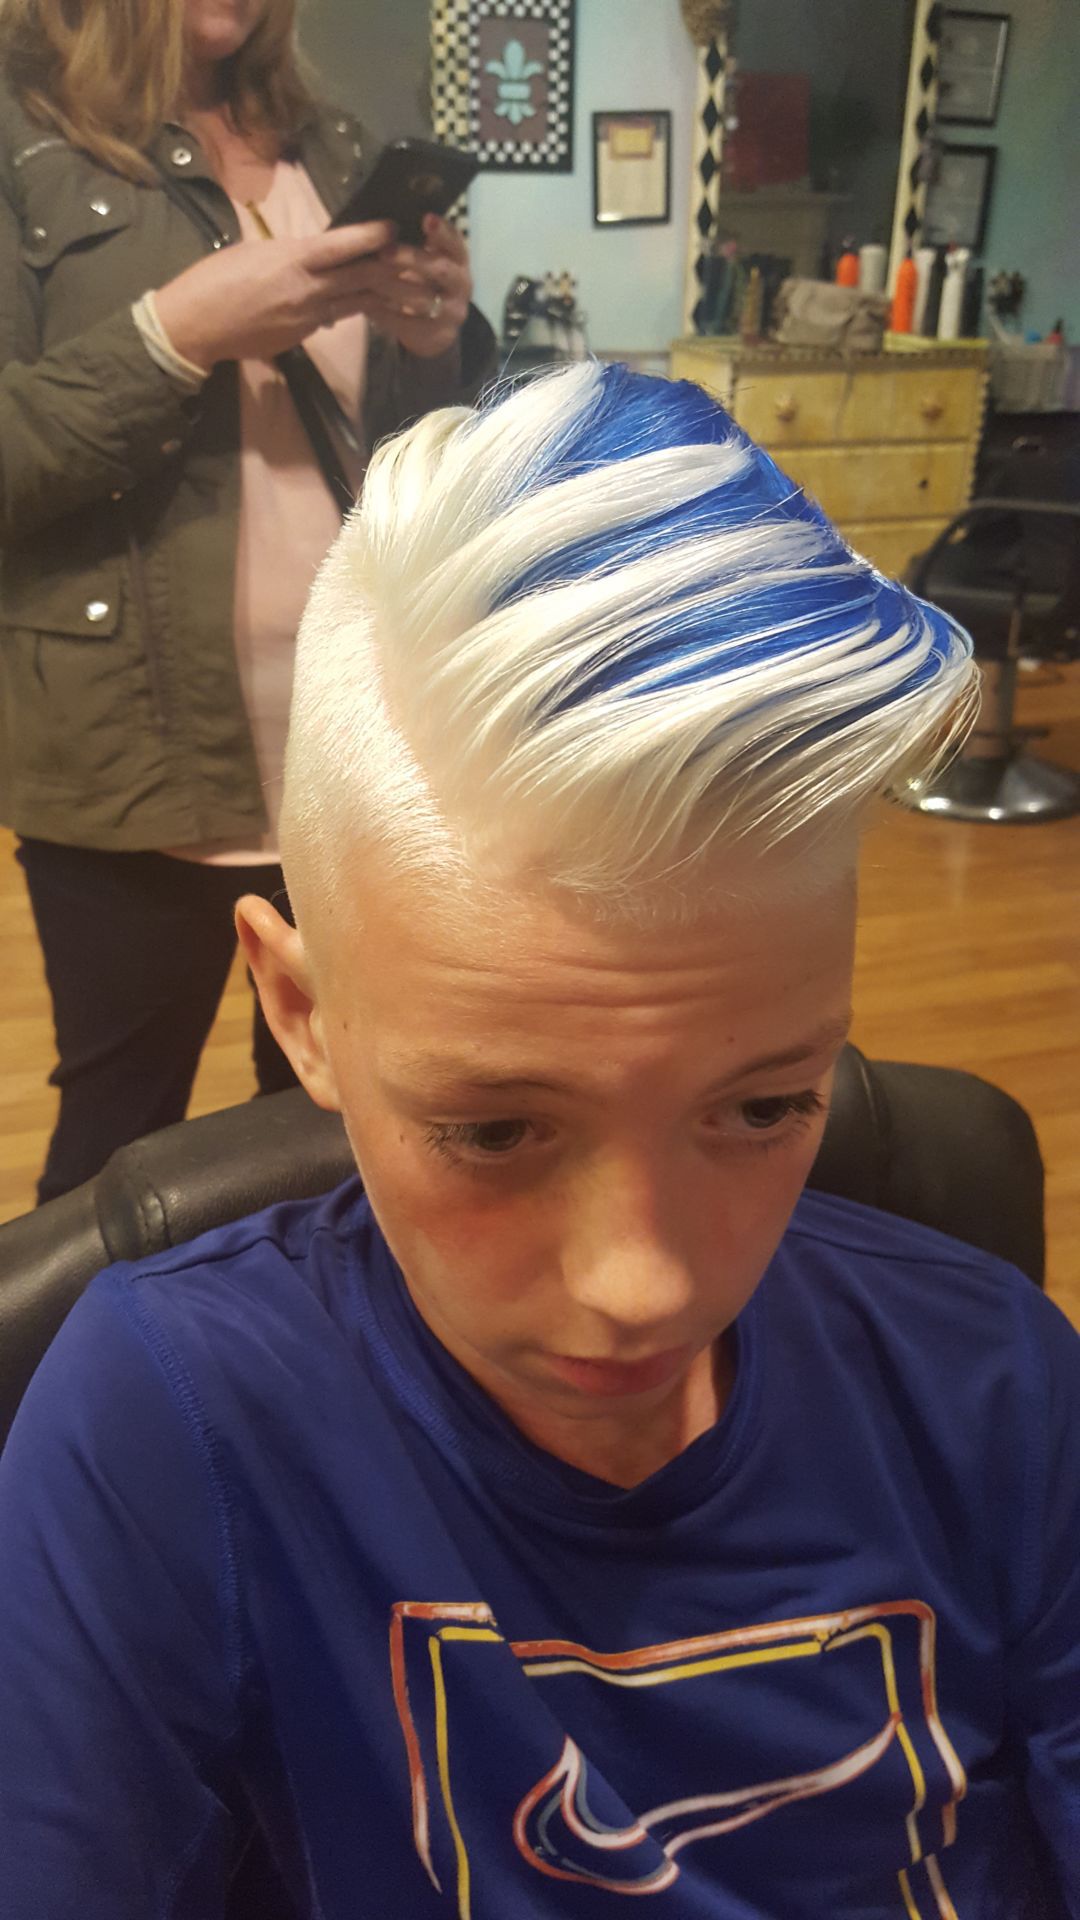 Rock Star Kid Auburn Hair Salon To Hold Fundraiser For